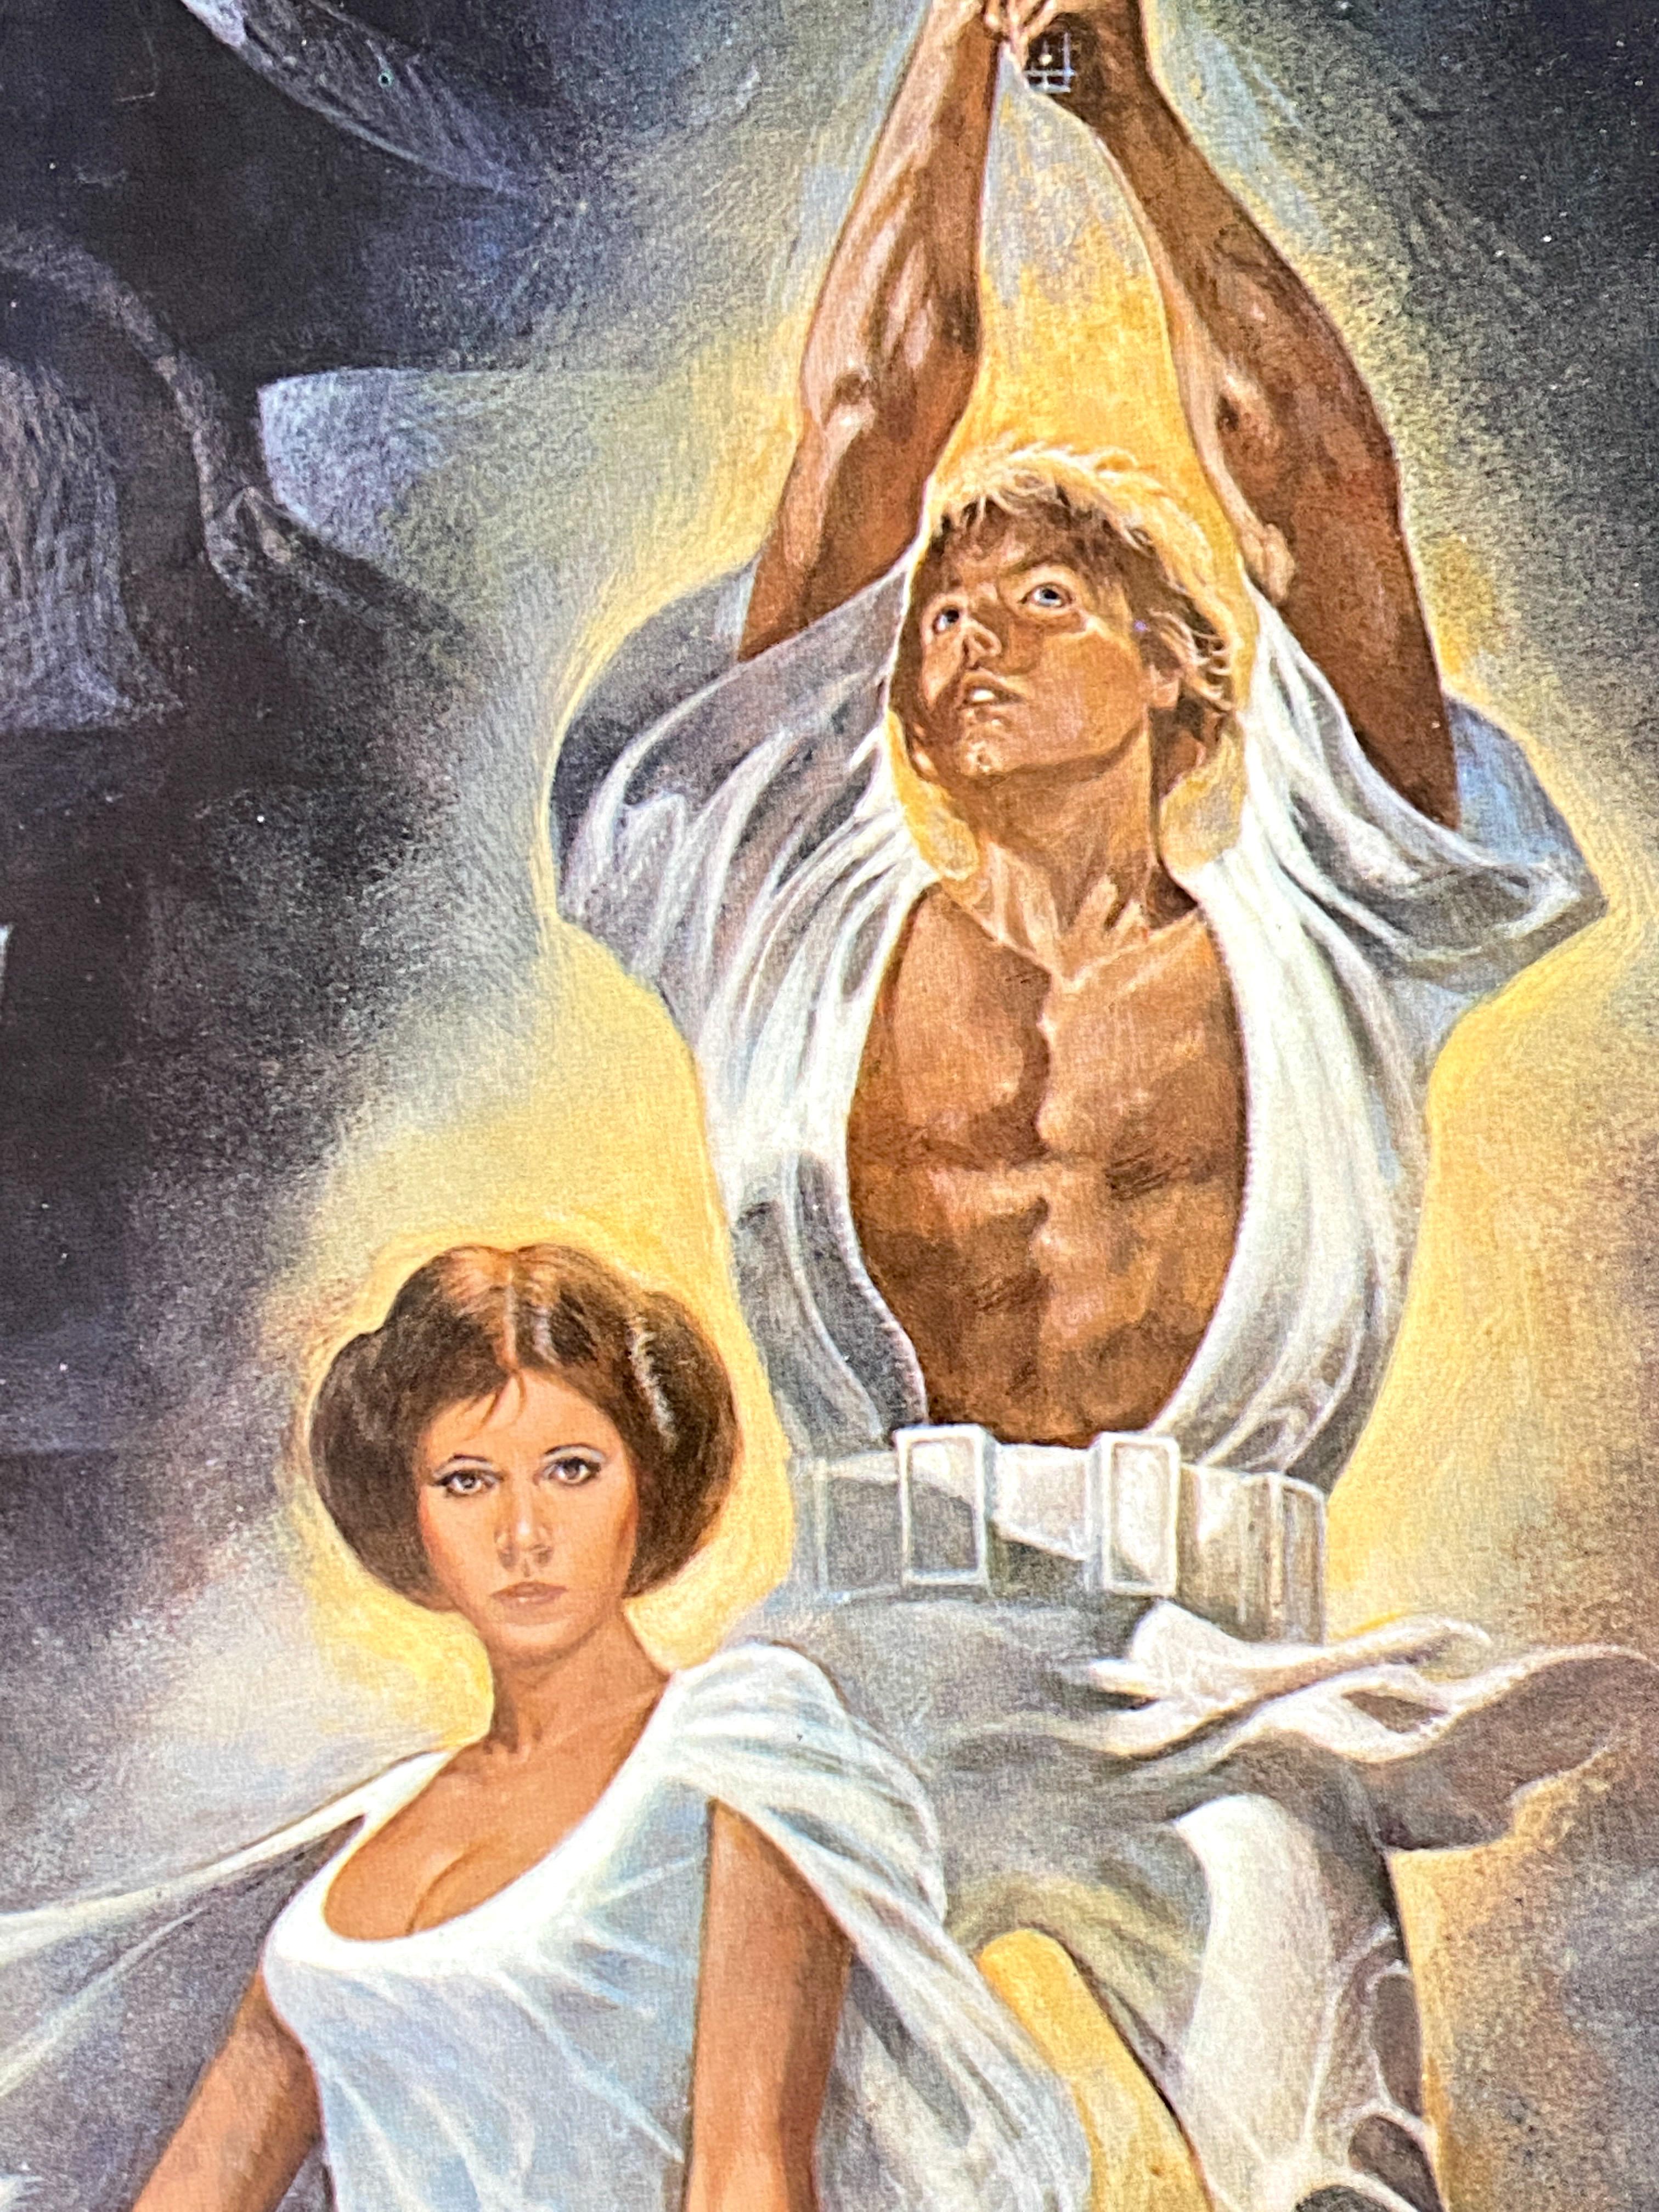 1977 star wars poster original